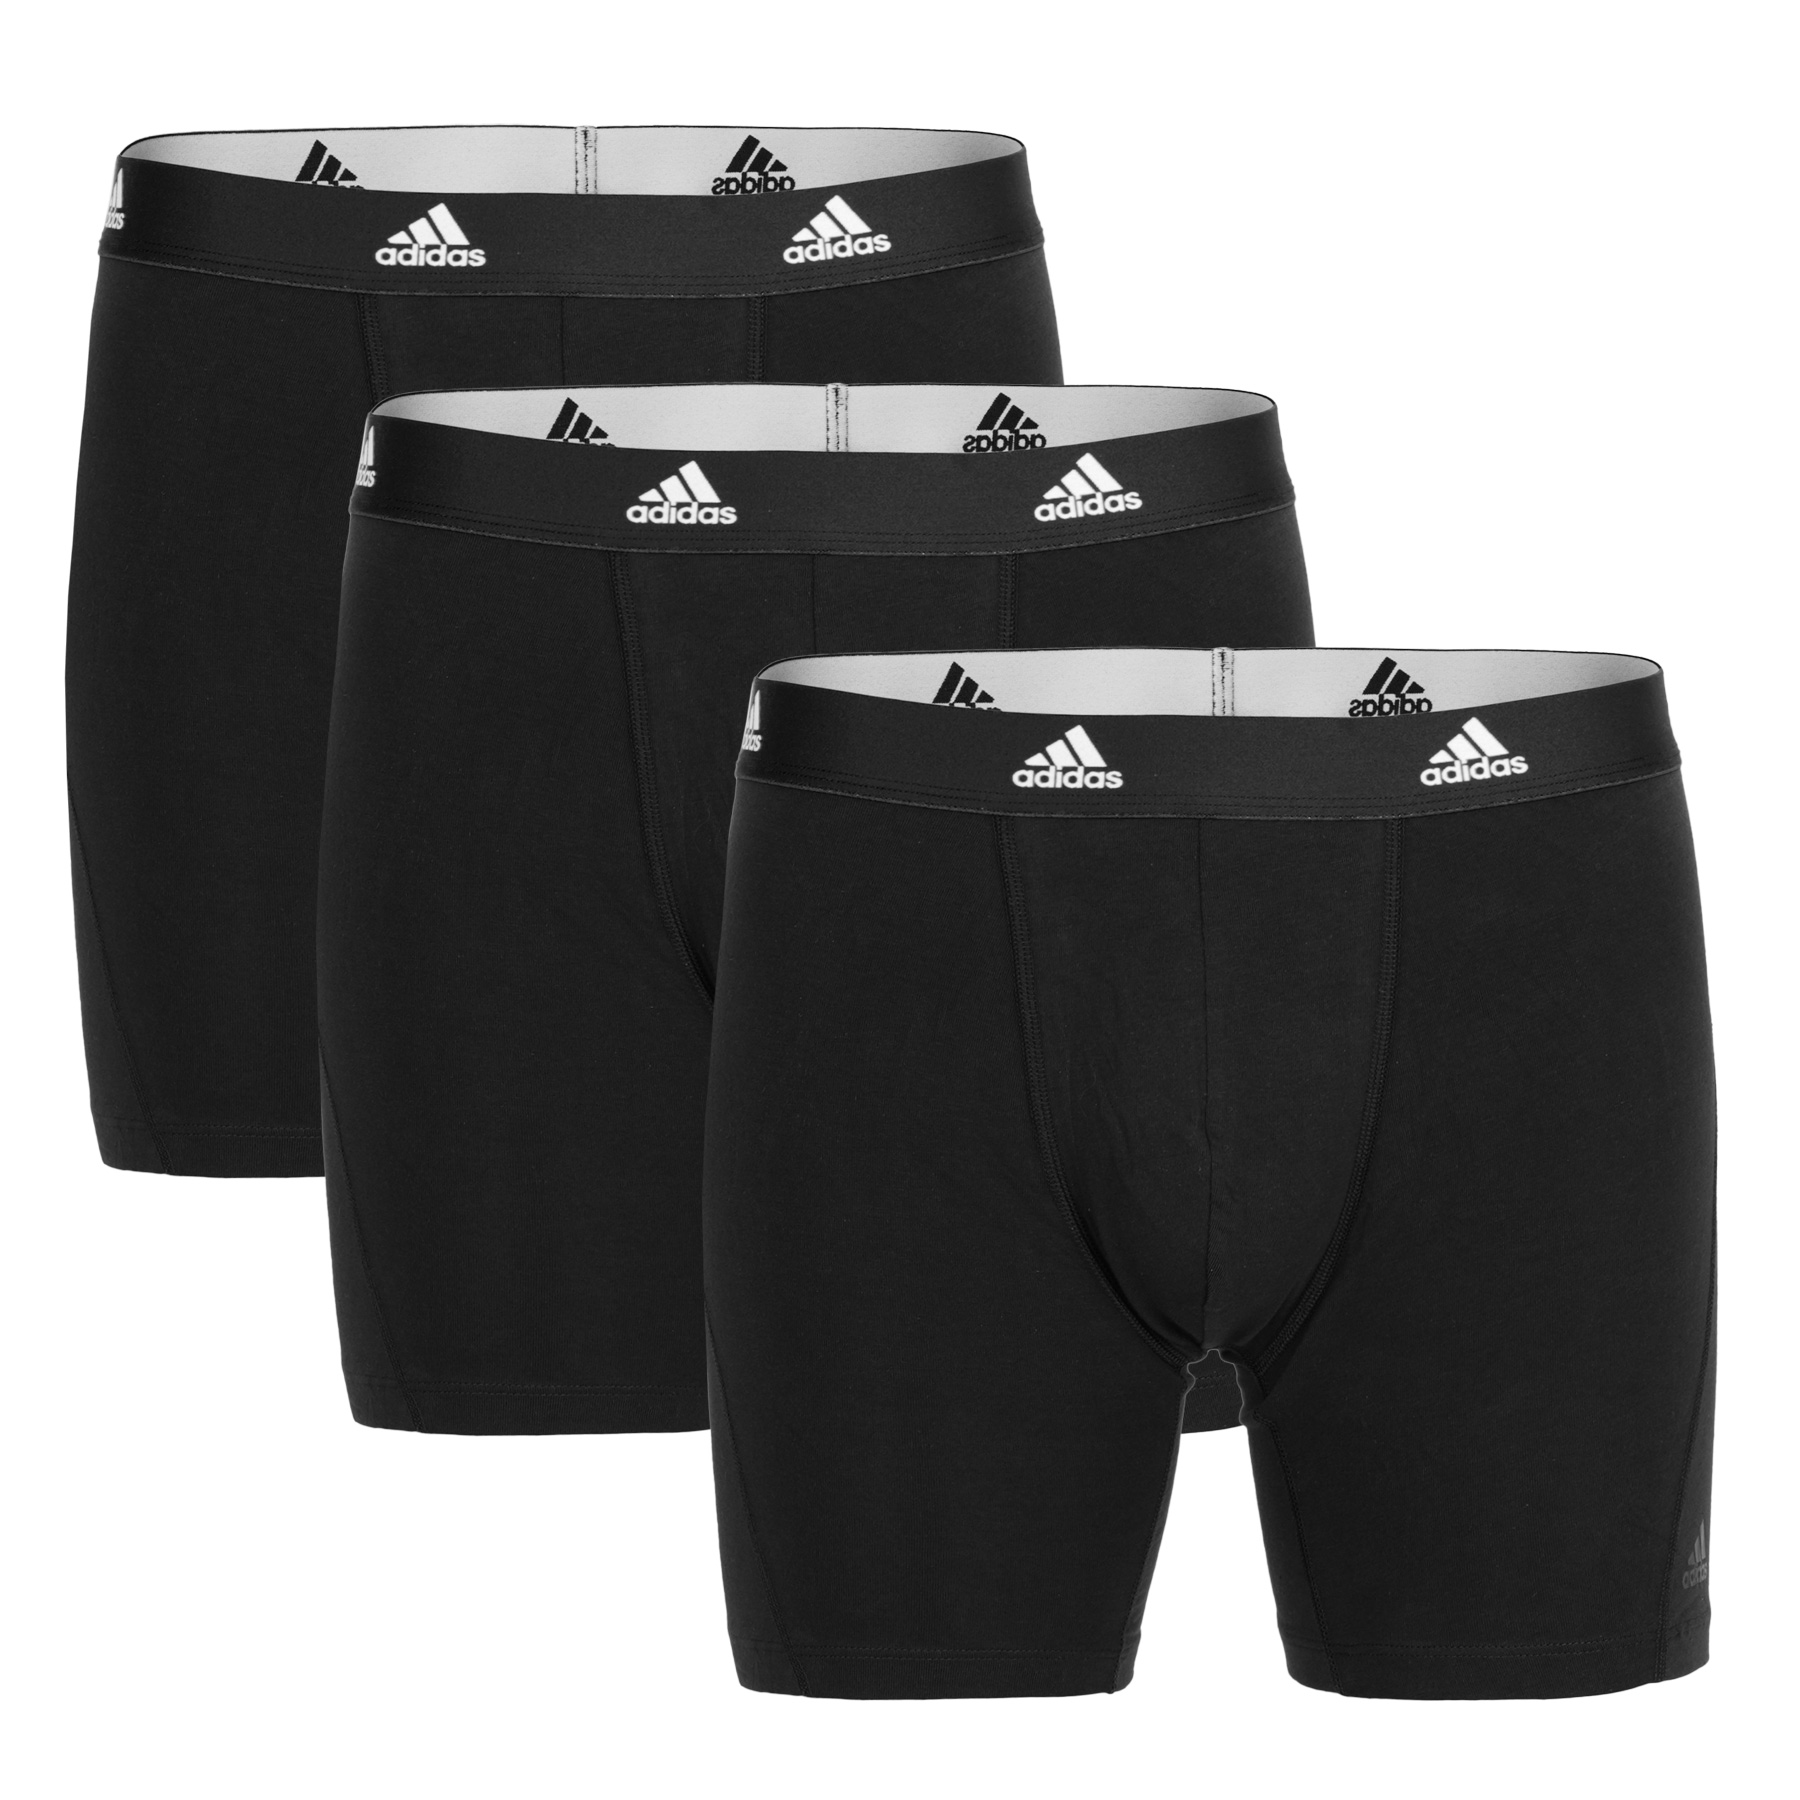 Picture of adidas Sports Underwear Active Flex Cotton Boxer Brief Men - 3 Pack - 000-black